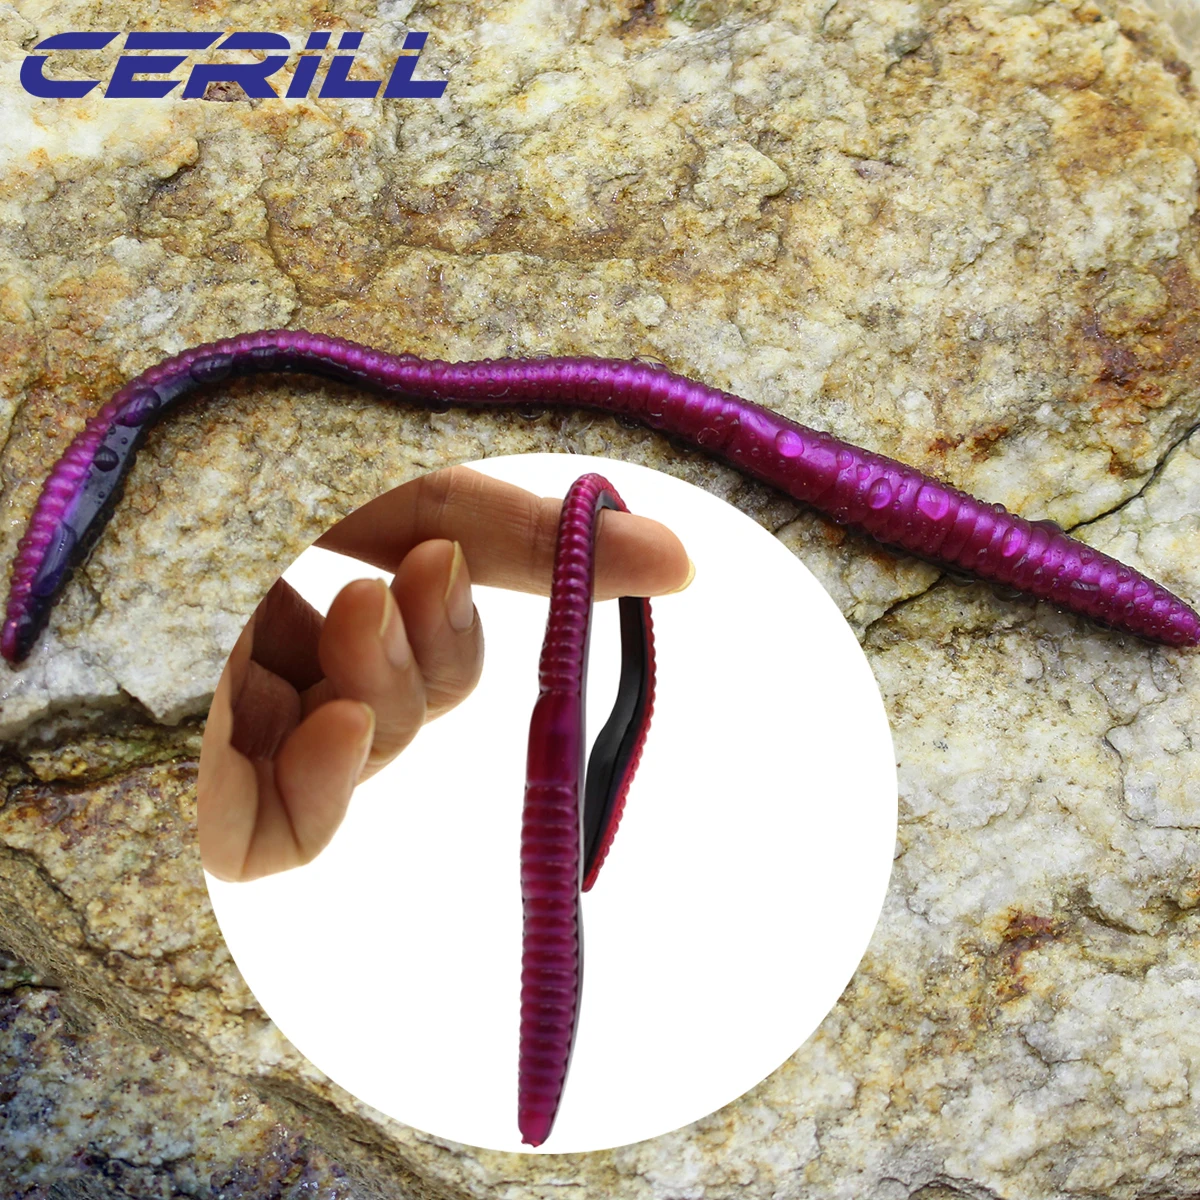 Cerill 10 PCS 160mm 5.5g Soft Fishing Lure Earthworm Bait Grub